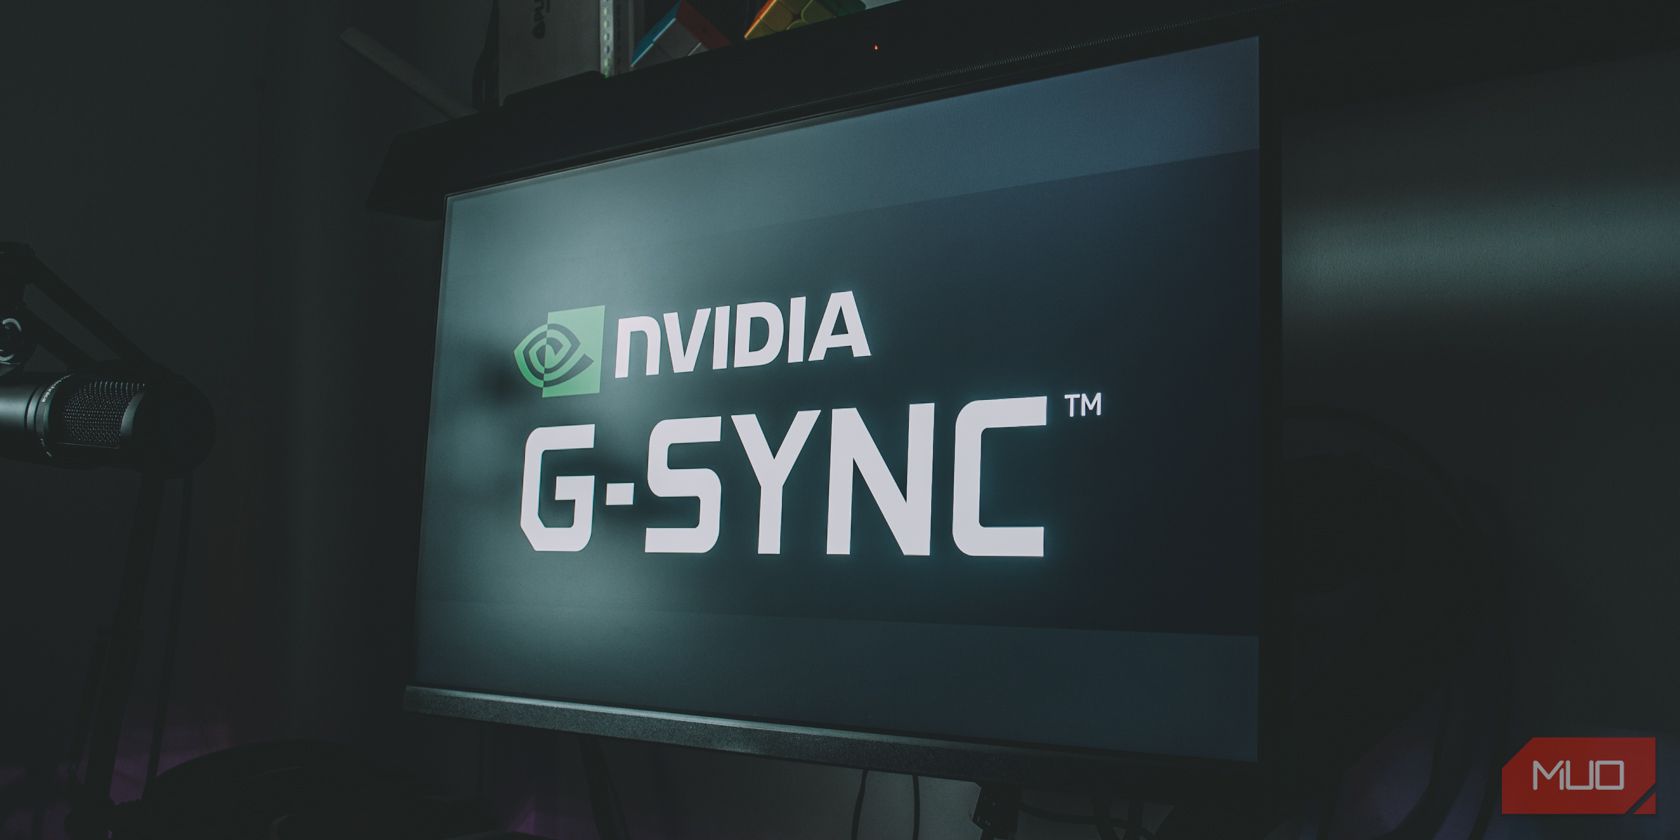 monitor with nvidia g sync image